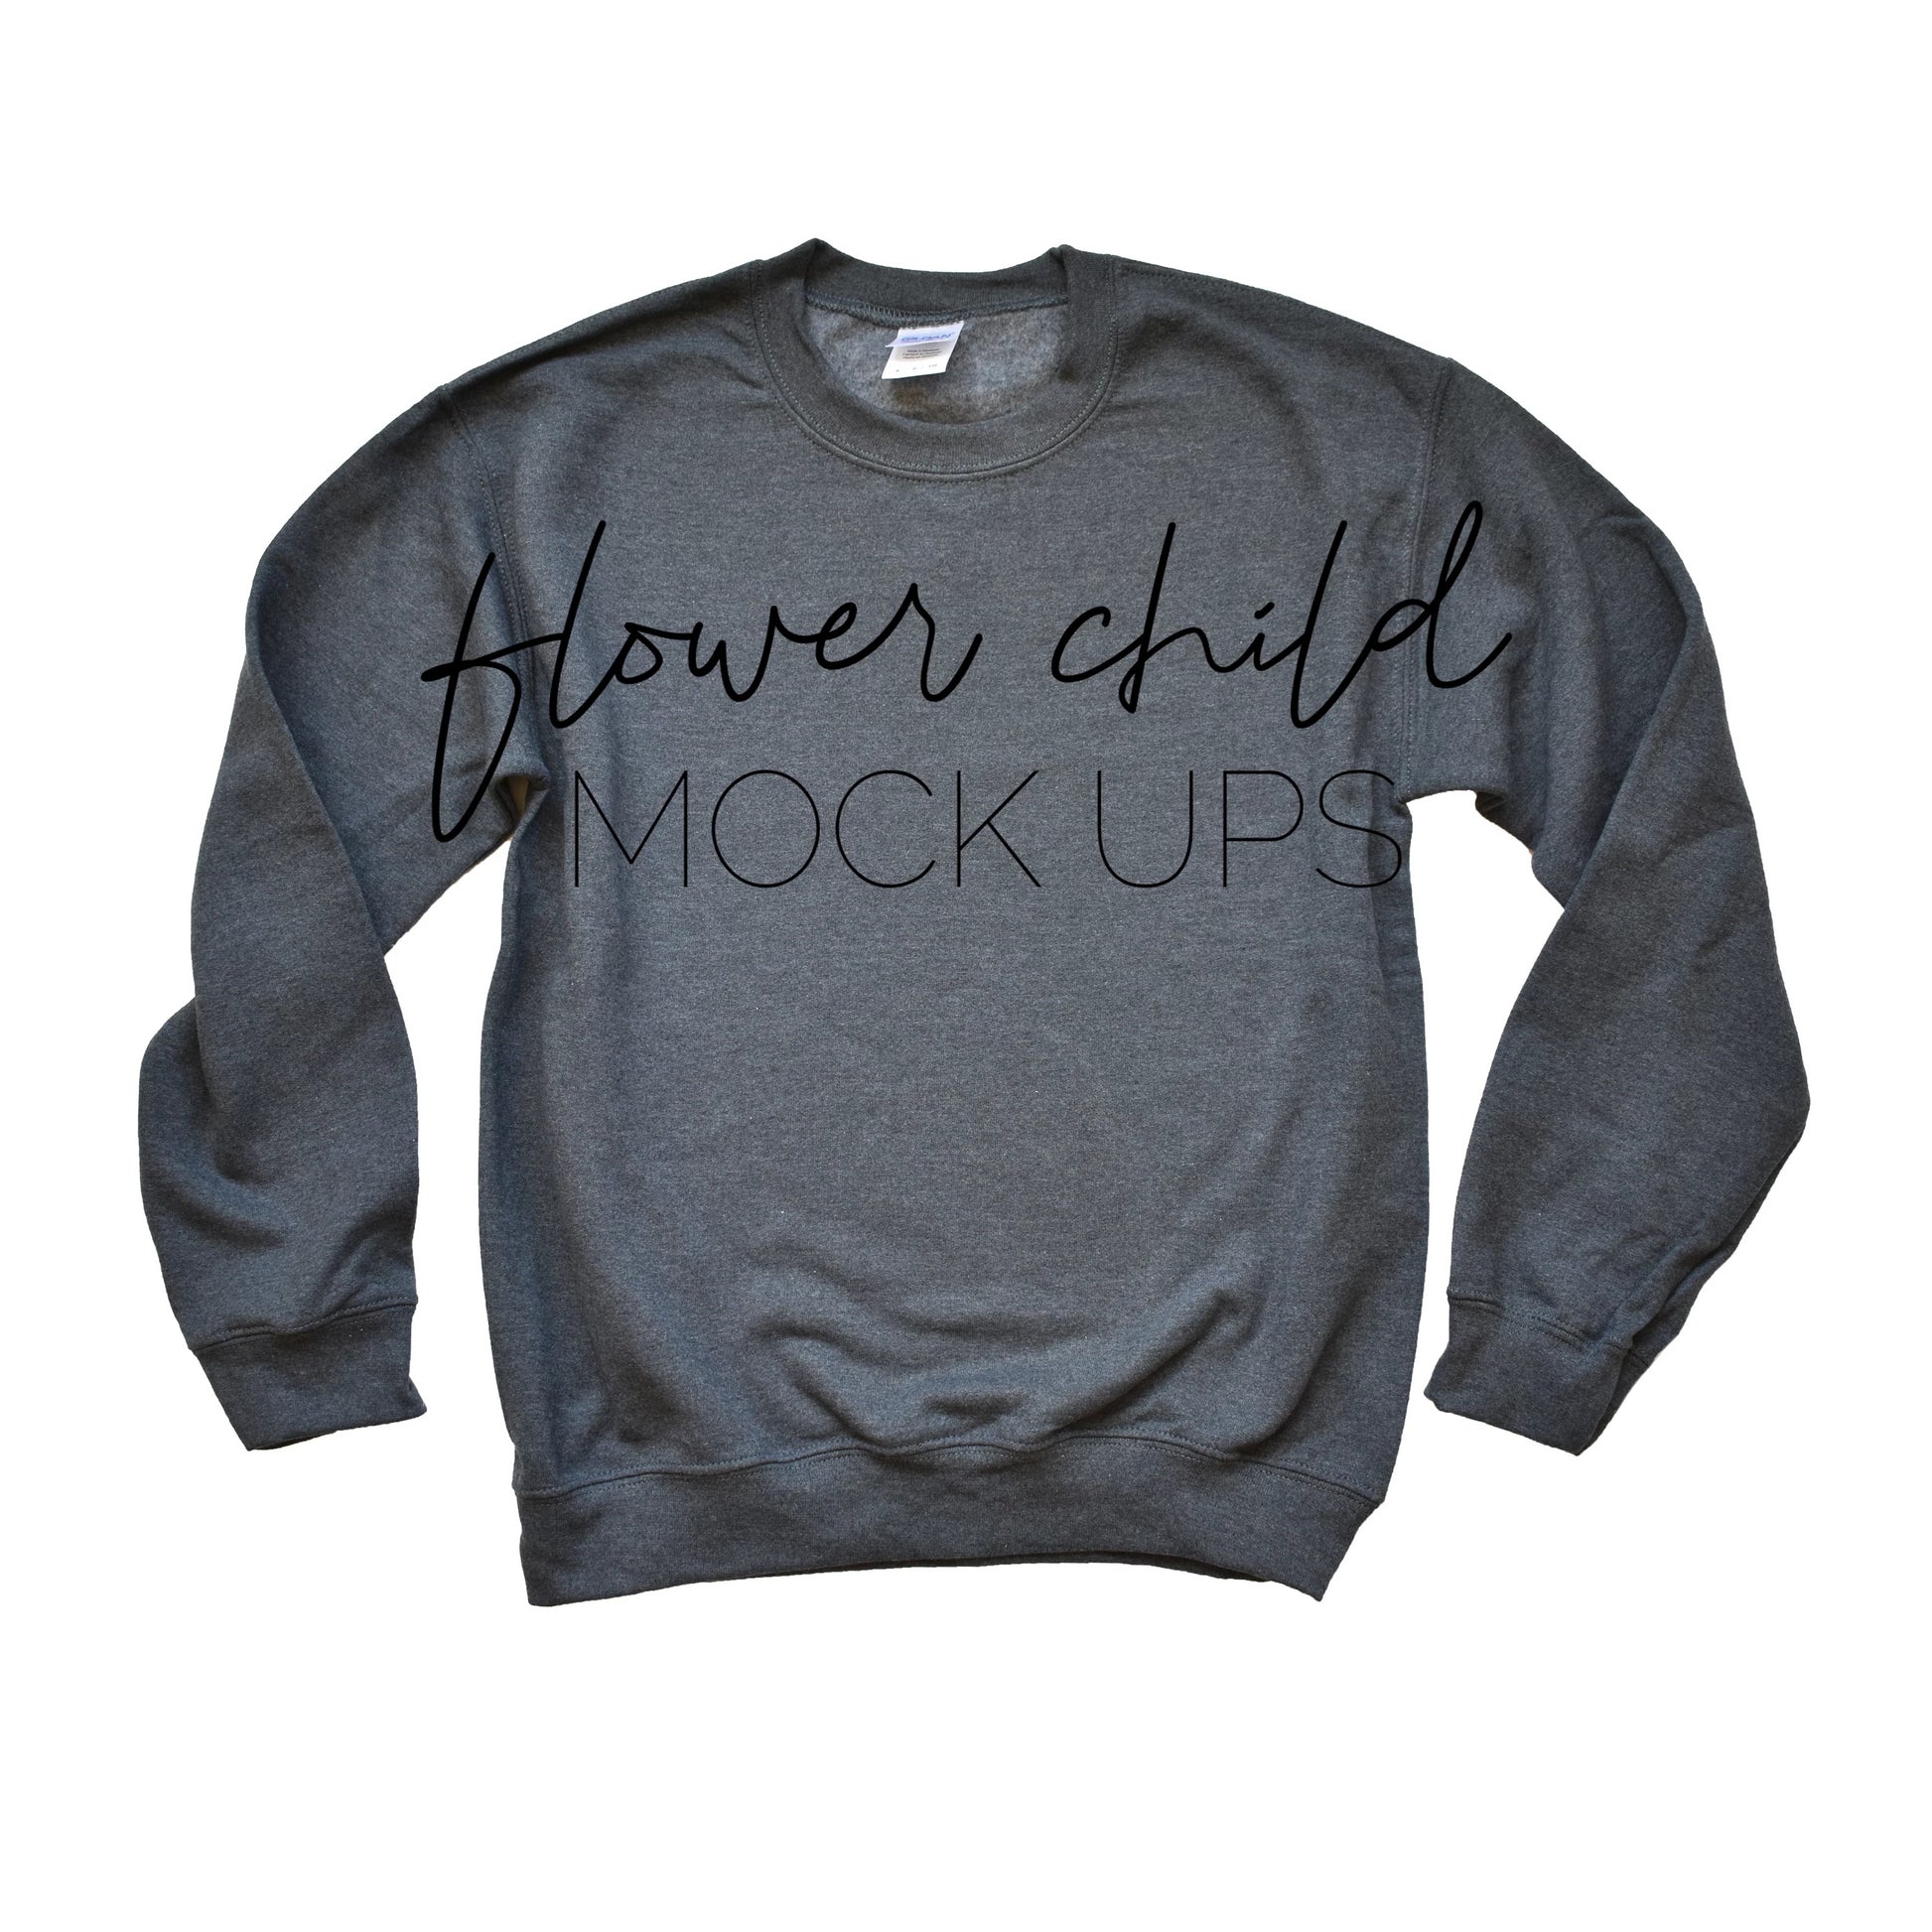 Gildan 18000 Sweatshirt Mock-up Dark Heather Gray - flowerchildmockups